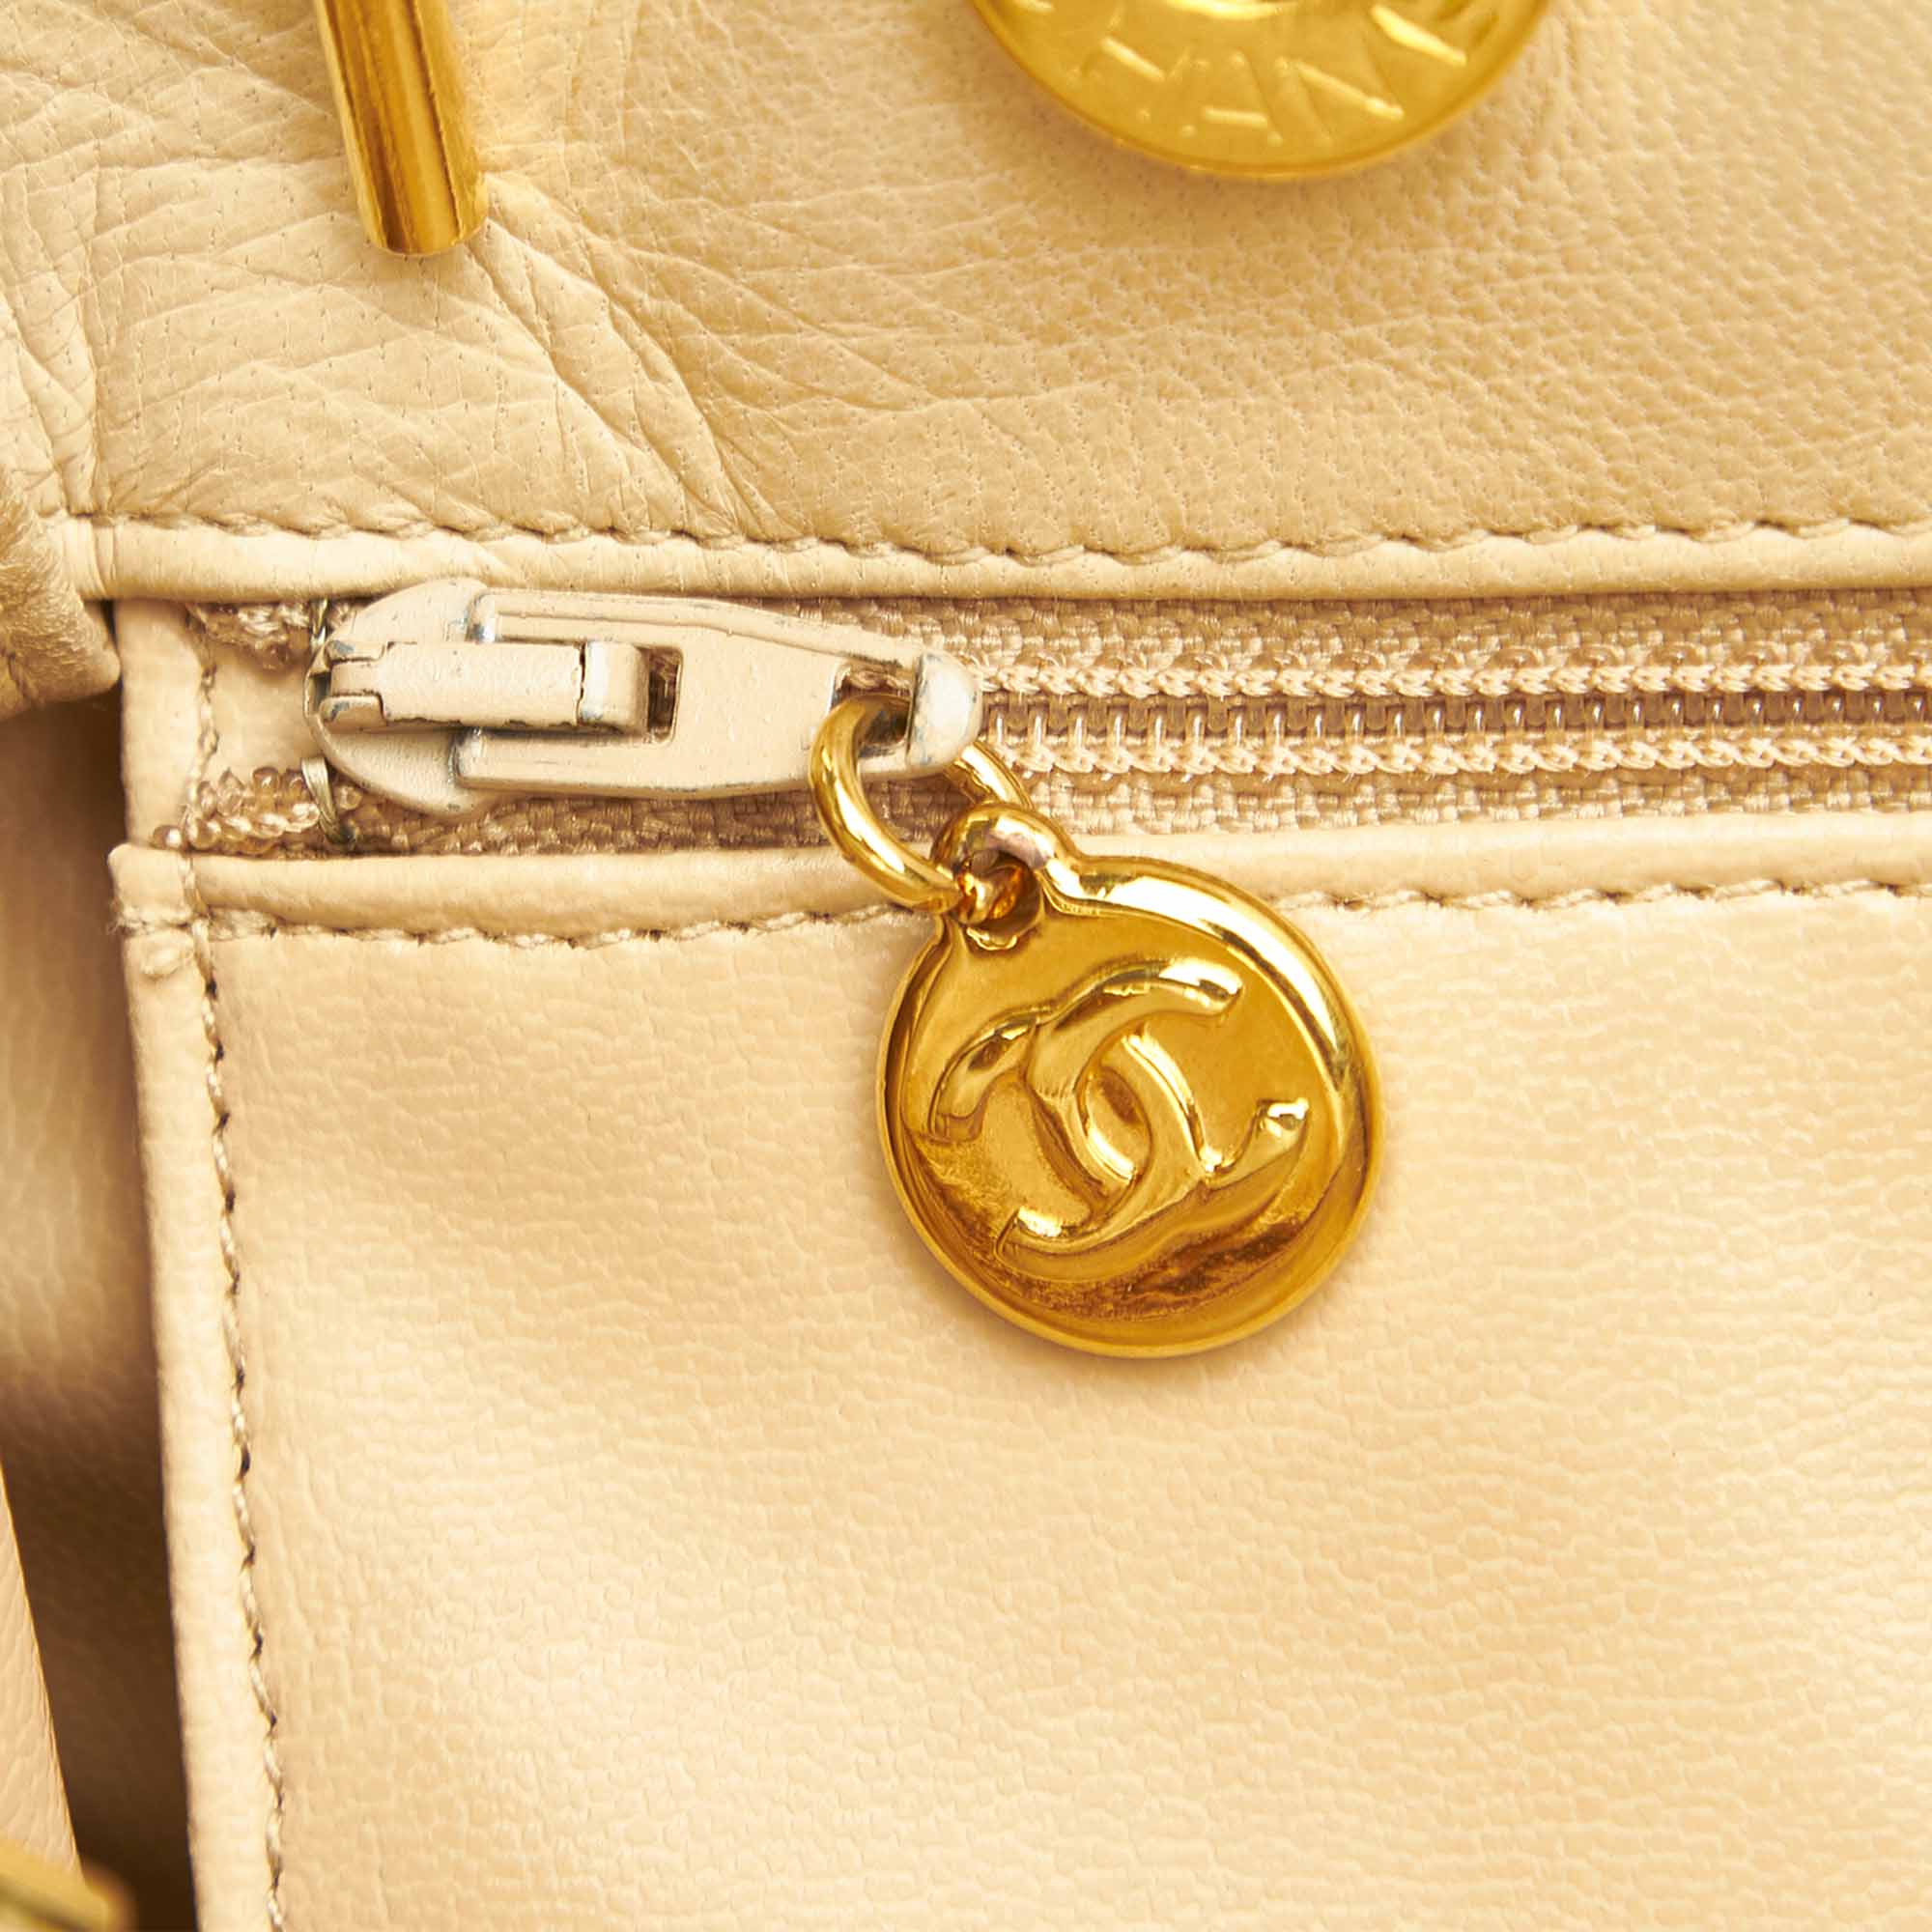 Chanel Chanel Cream Matelasse Leather Tote Bag  AWL1025